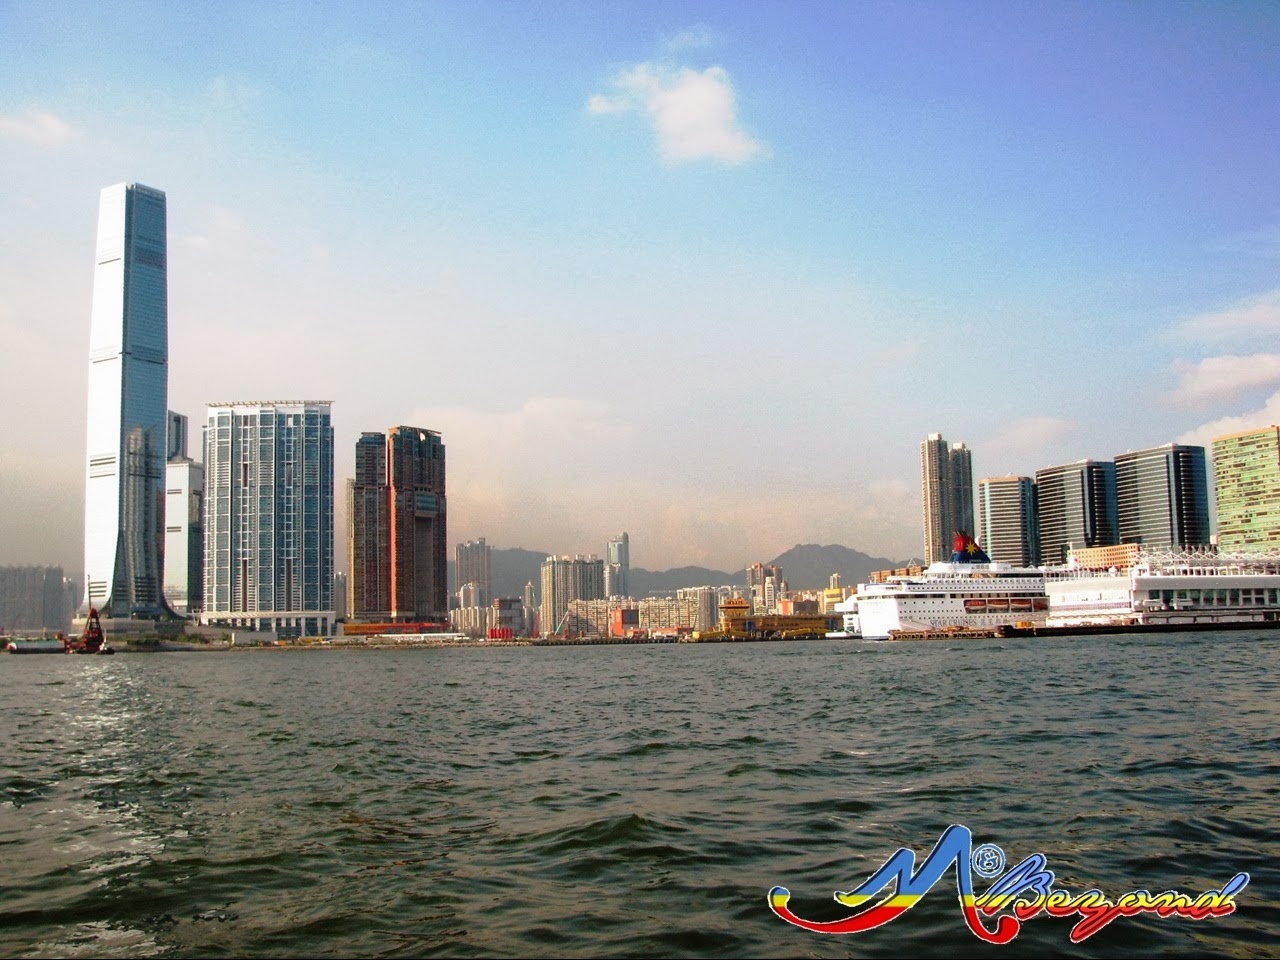 hongkong star ferry, victoria harbour ferry ride, hongkong trip, hongkong blog, hongkong-macau trip, hongkong itinerary, hongkong tourist attractions, where to go in hongkong, hongkong tourist spot